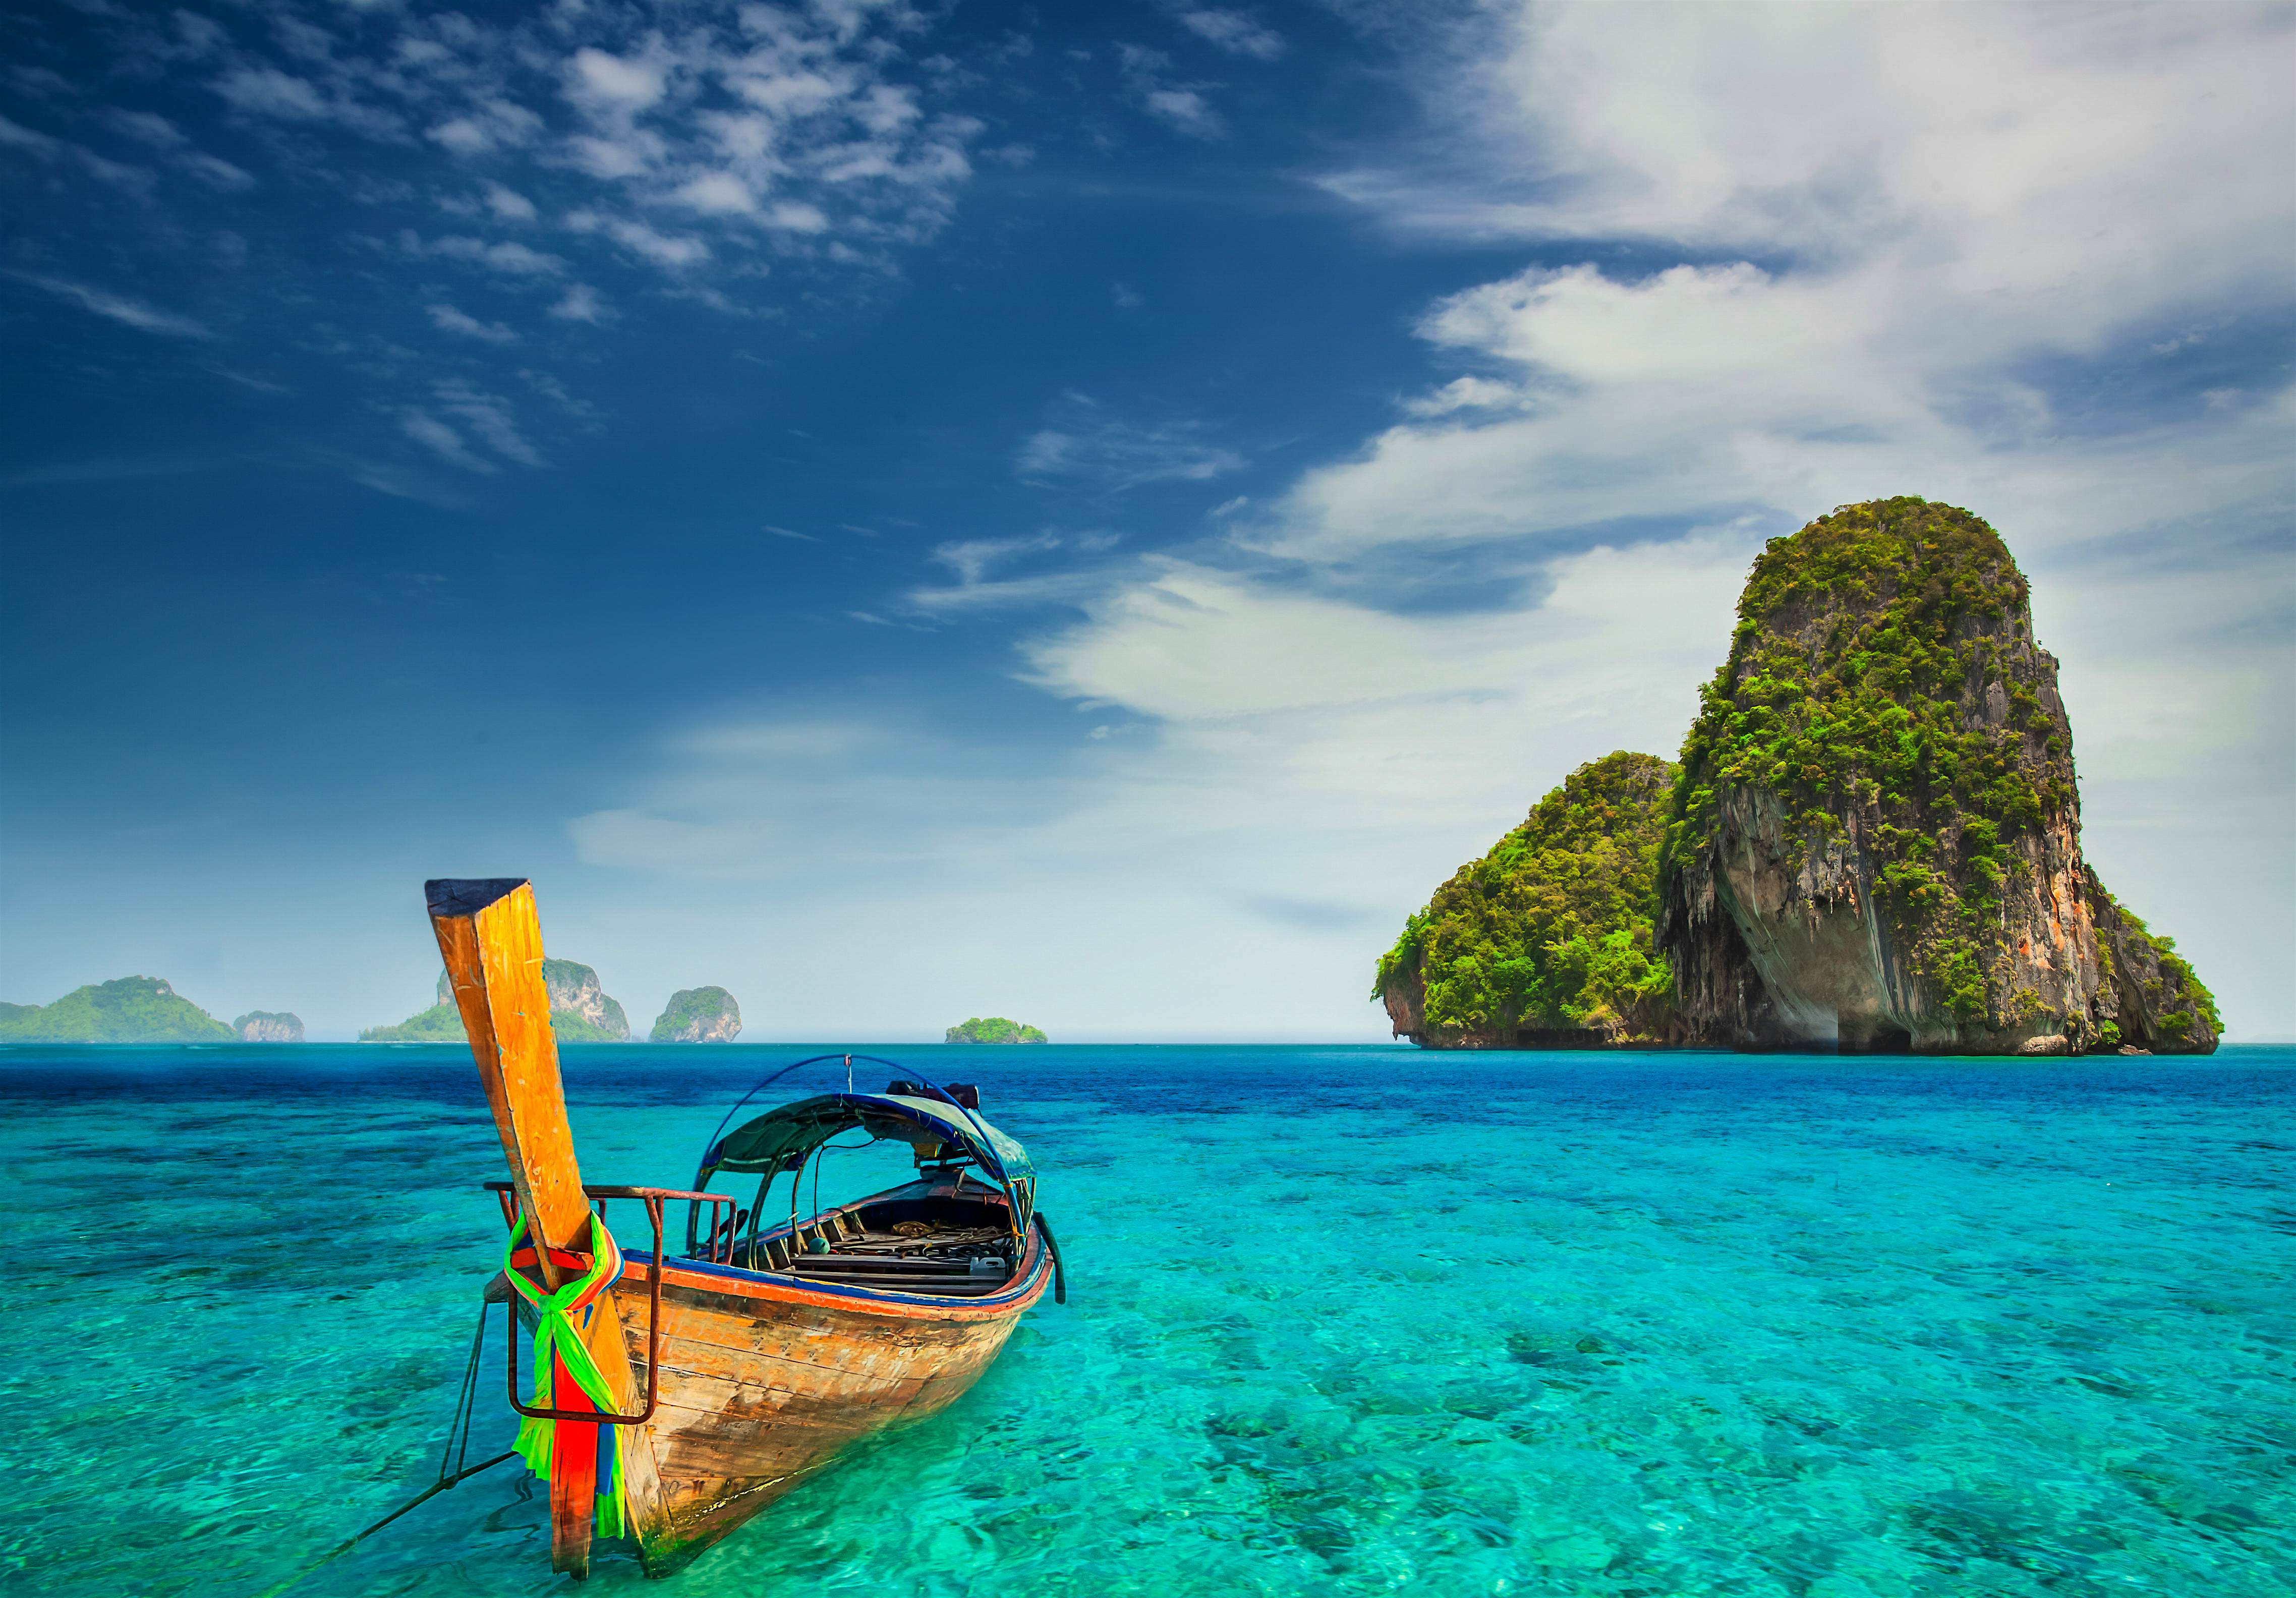 Phuket,honeymoon destinations on a budget